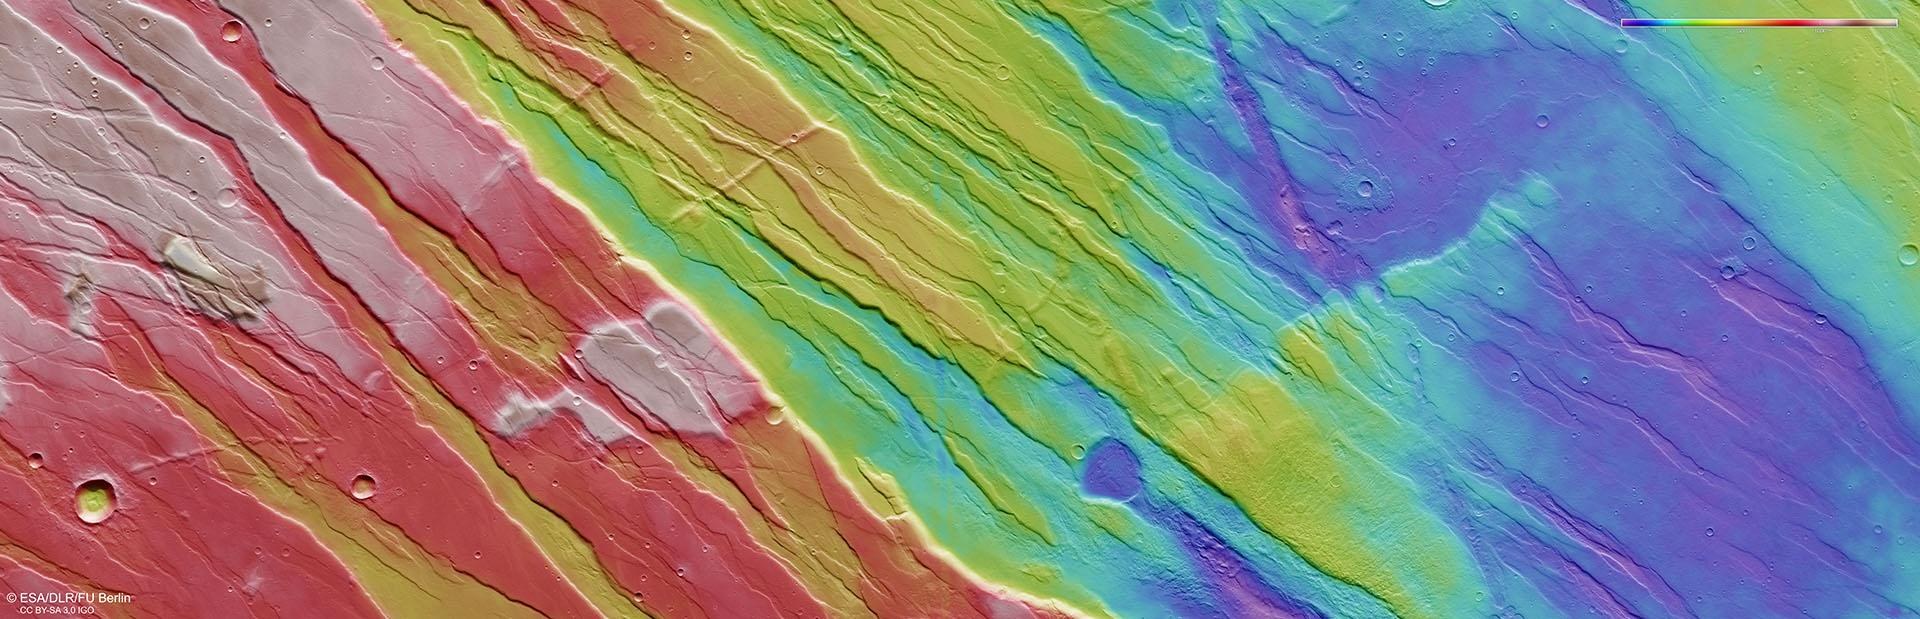 Topographische Bildkarte der tektonischen Strukturen in Ascuris Planum